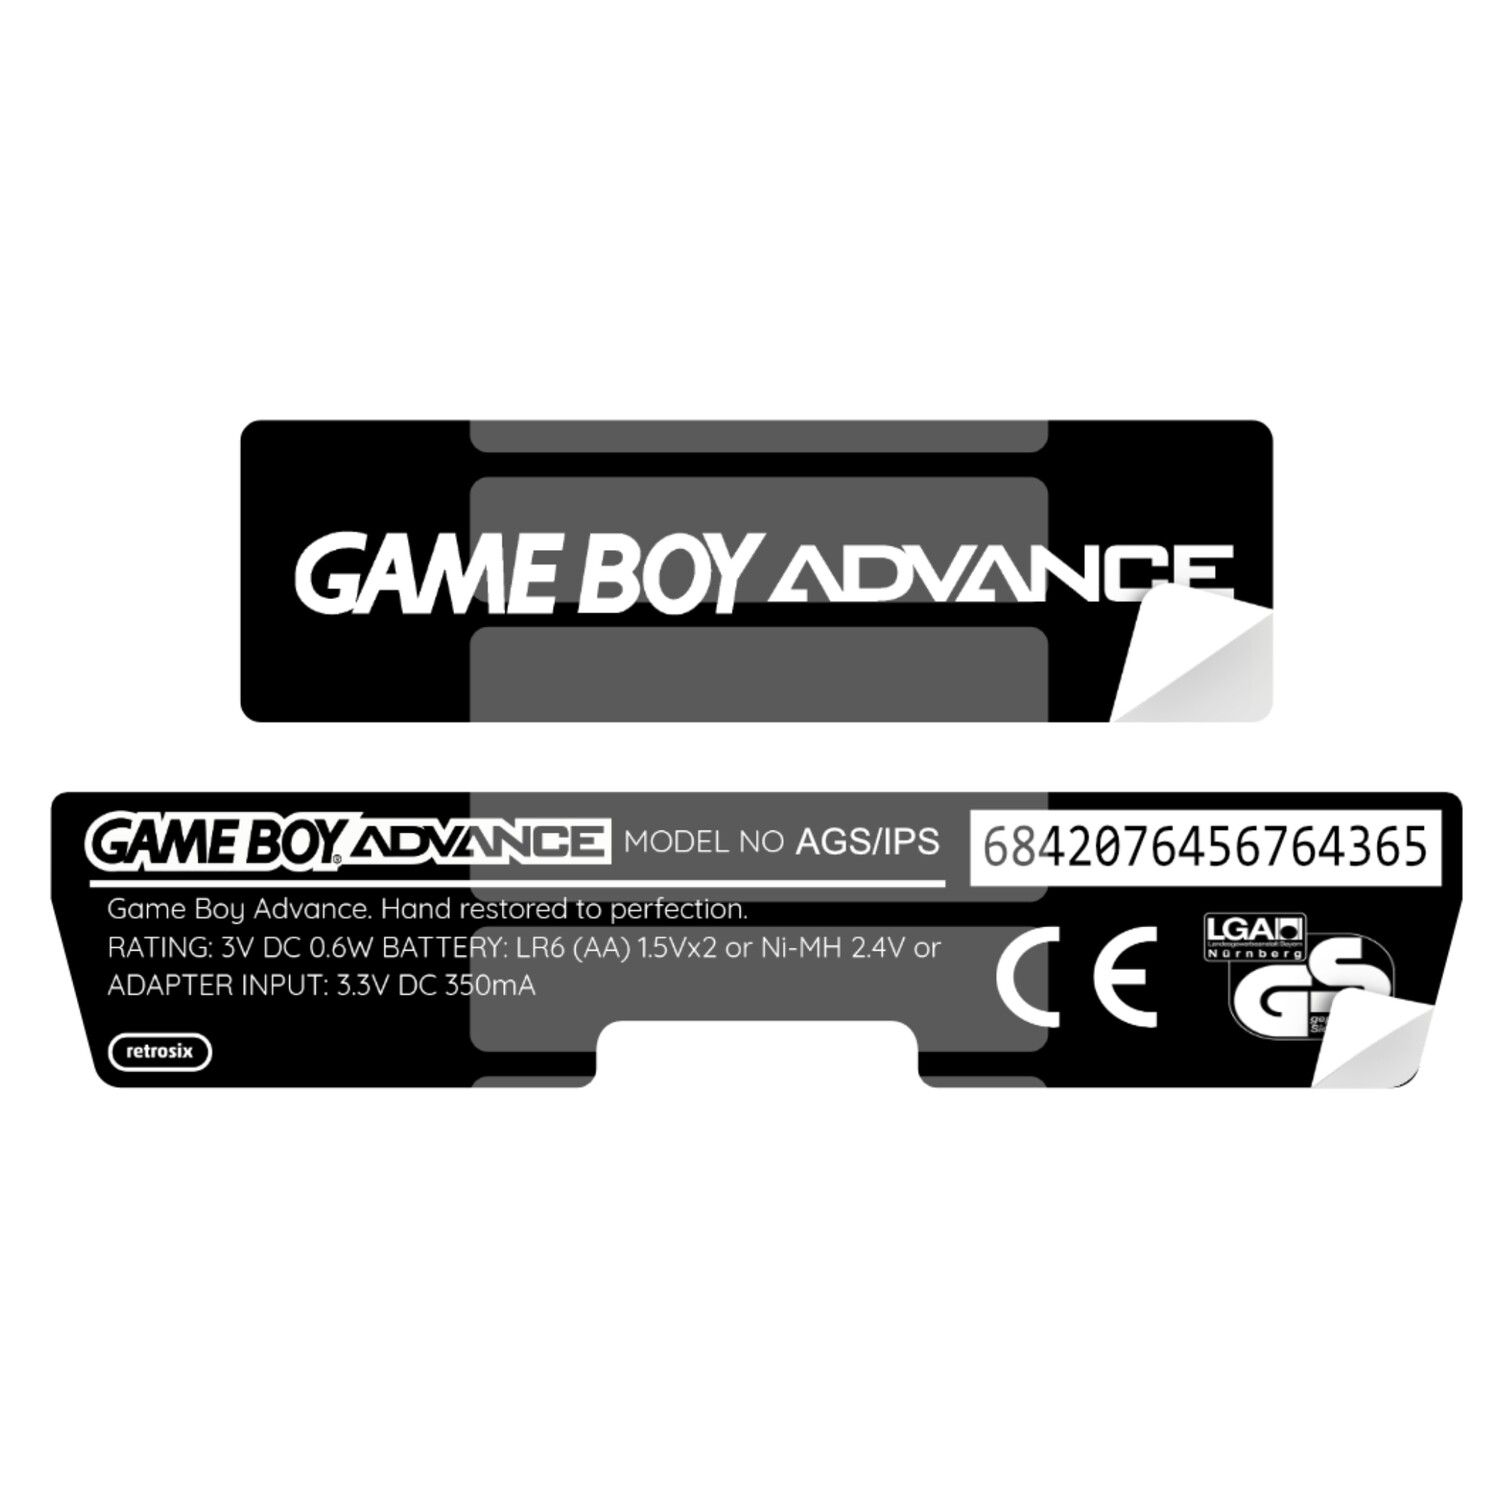 Game Boy Advance Sticker (NES)